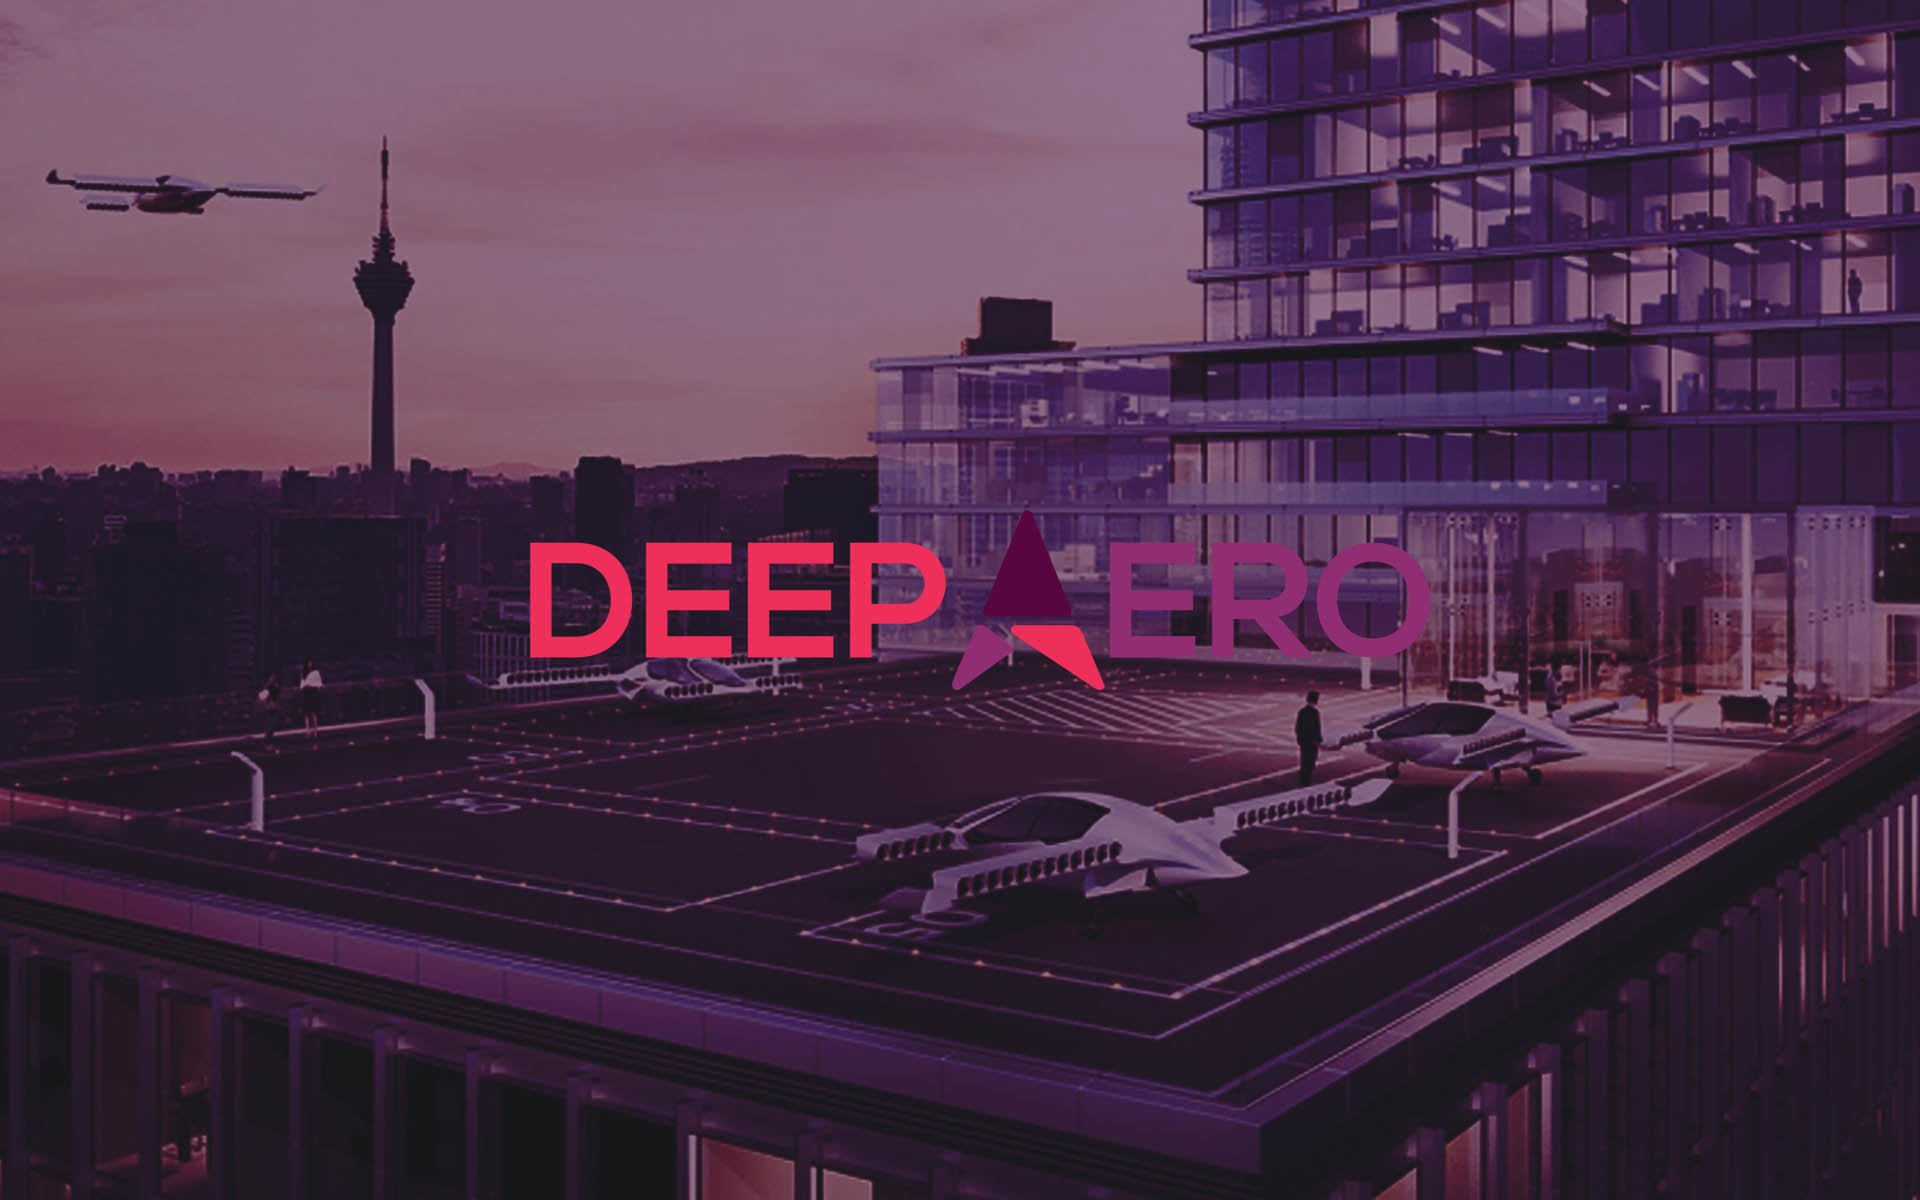 DEEP AERO (DRONE) Token will power the AI Driven Drone Economy on the Blockchain